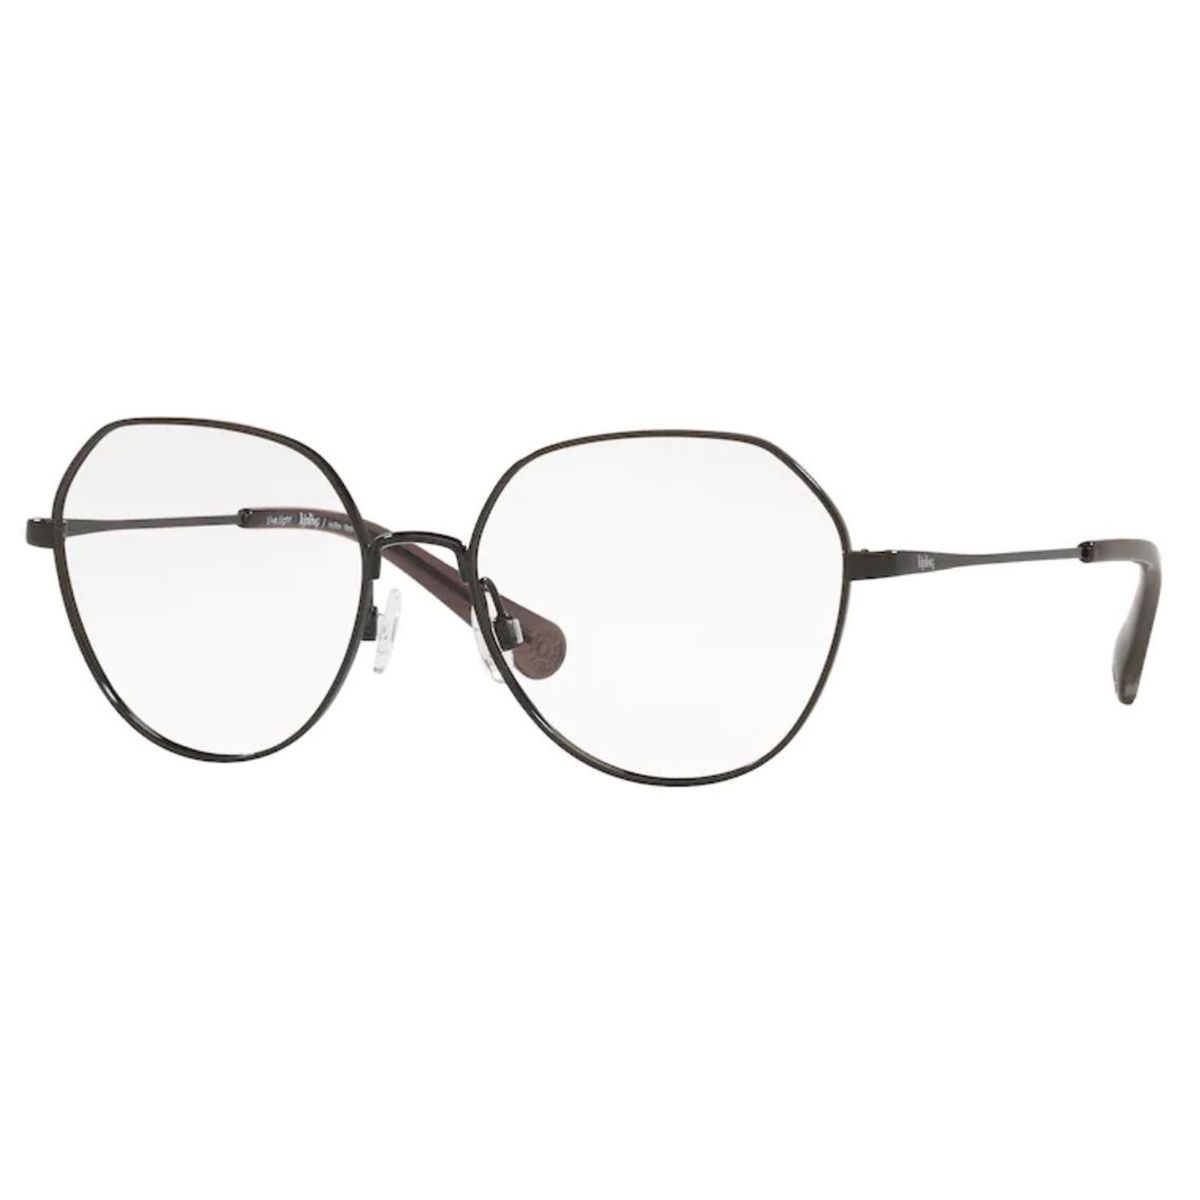 Óculos de Grau Kipling Redondo KP1117 Metal Preto Brilho